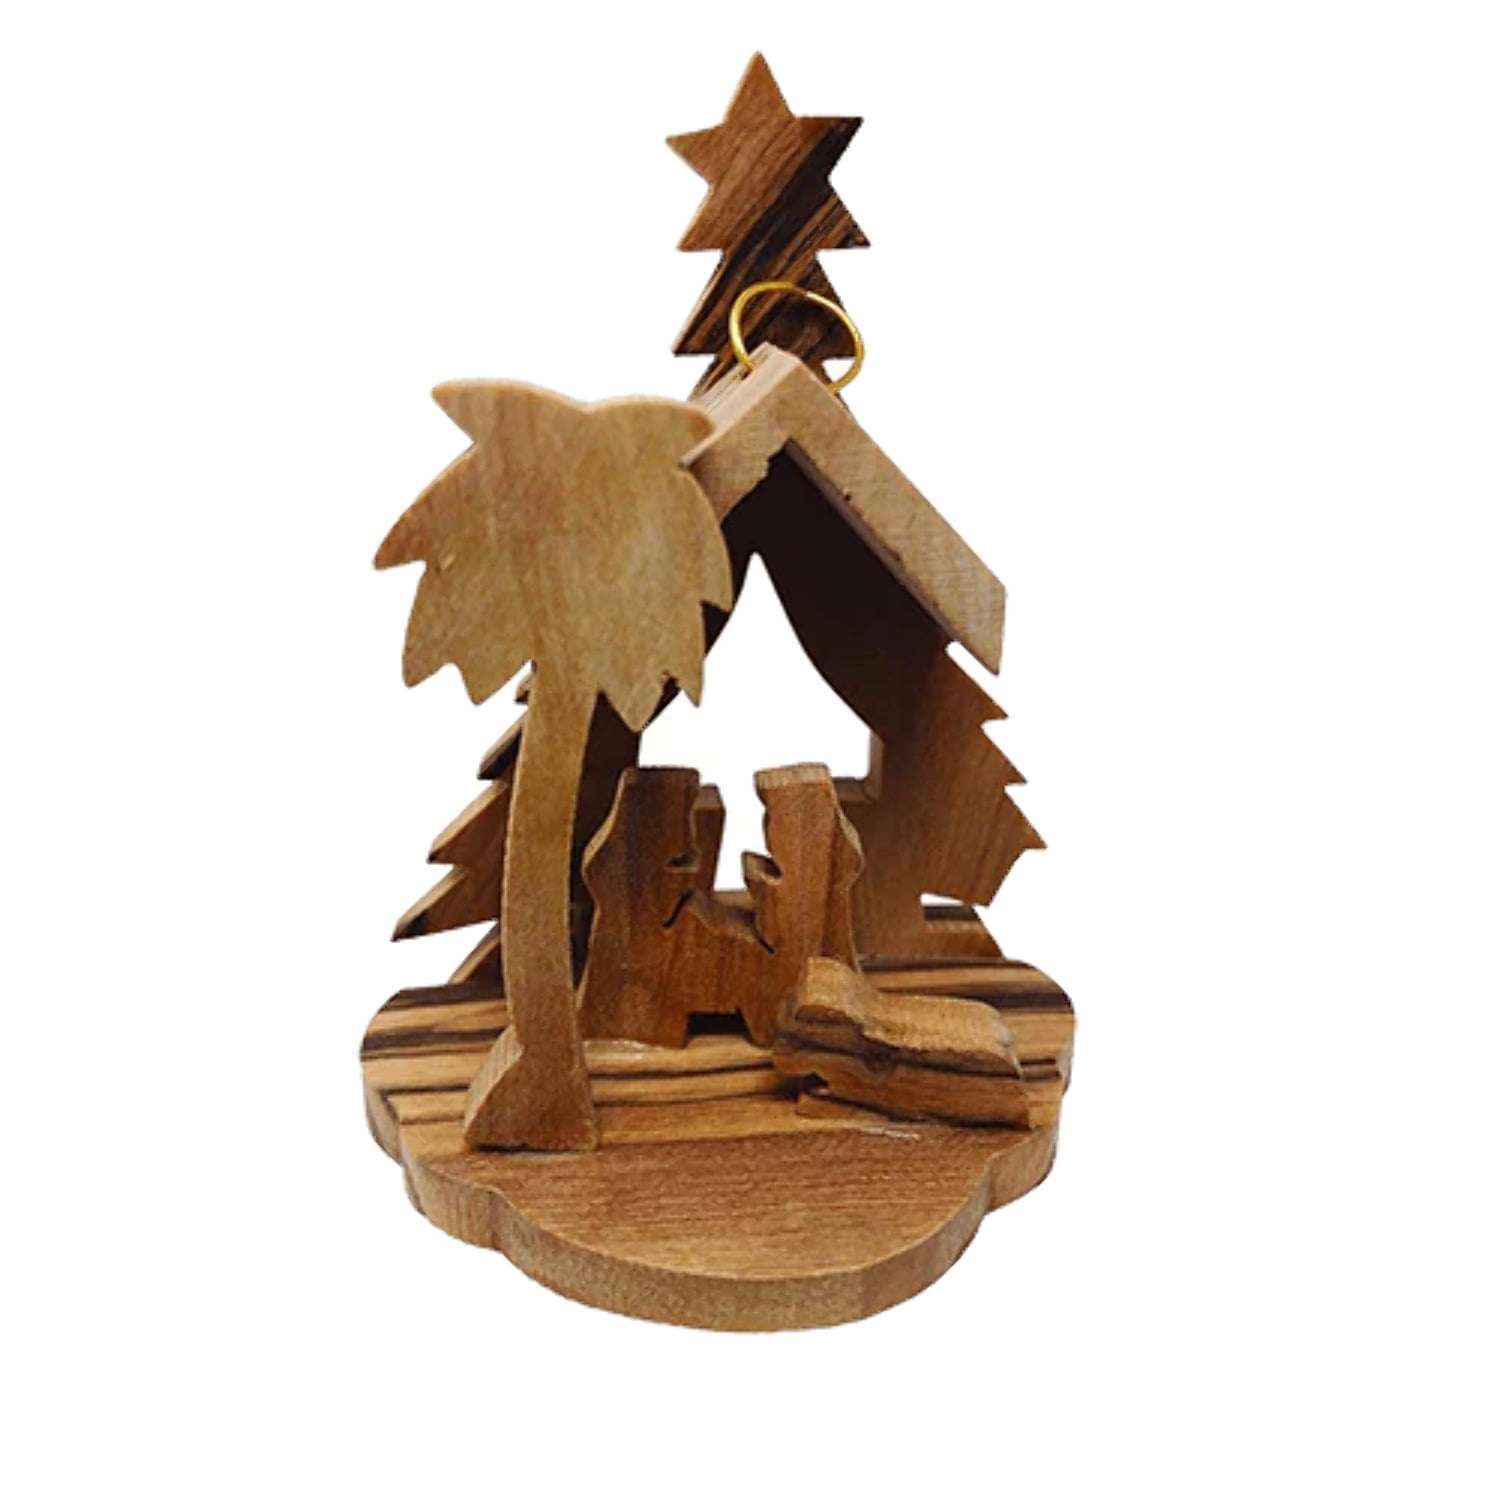 30 PCS Bamboo Child Woodsy Decor Nativity Craft Holiday Buttons